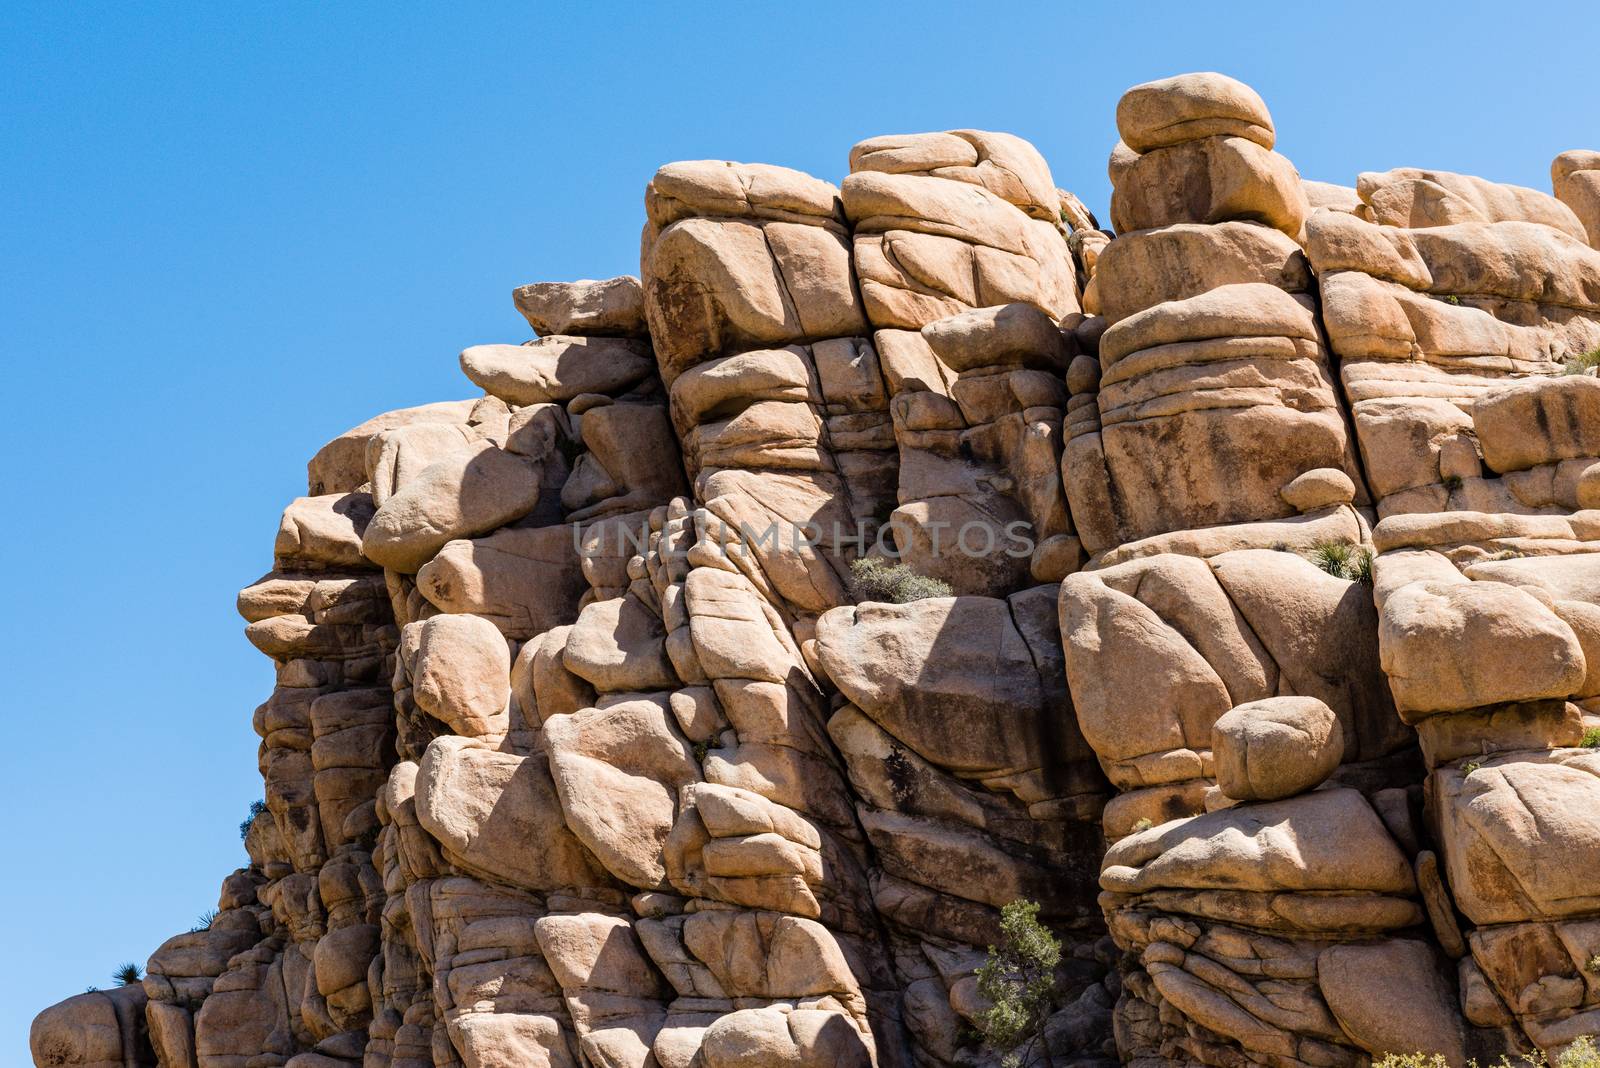 Granite boulders in the Wonderland of Rocks area along Willow Ho by Njean